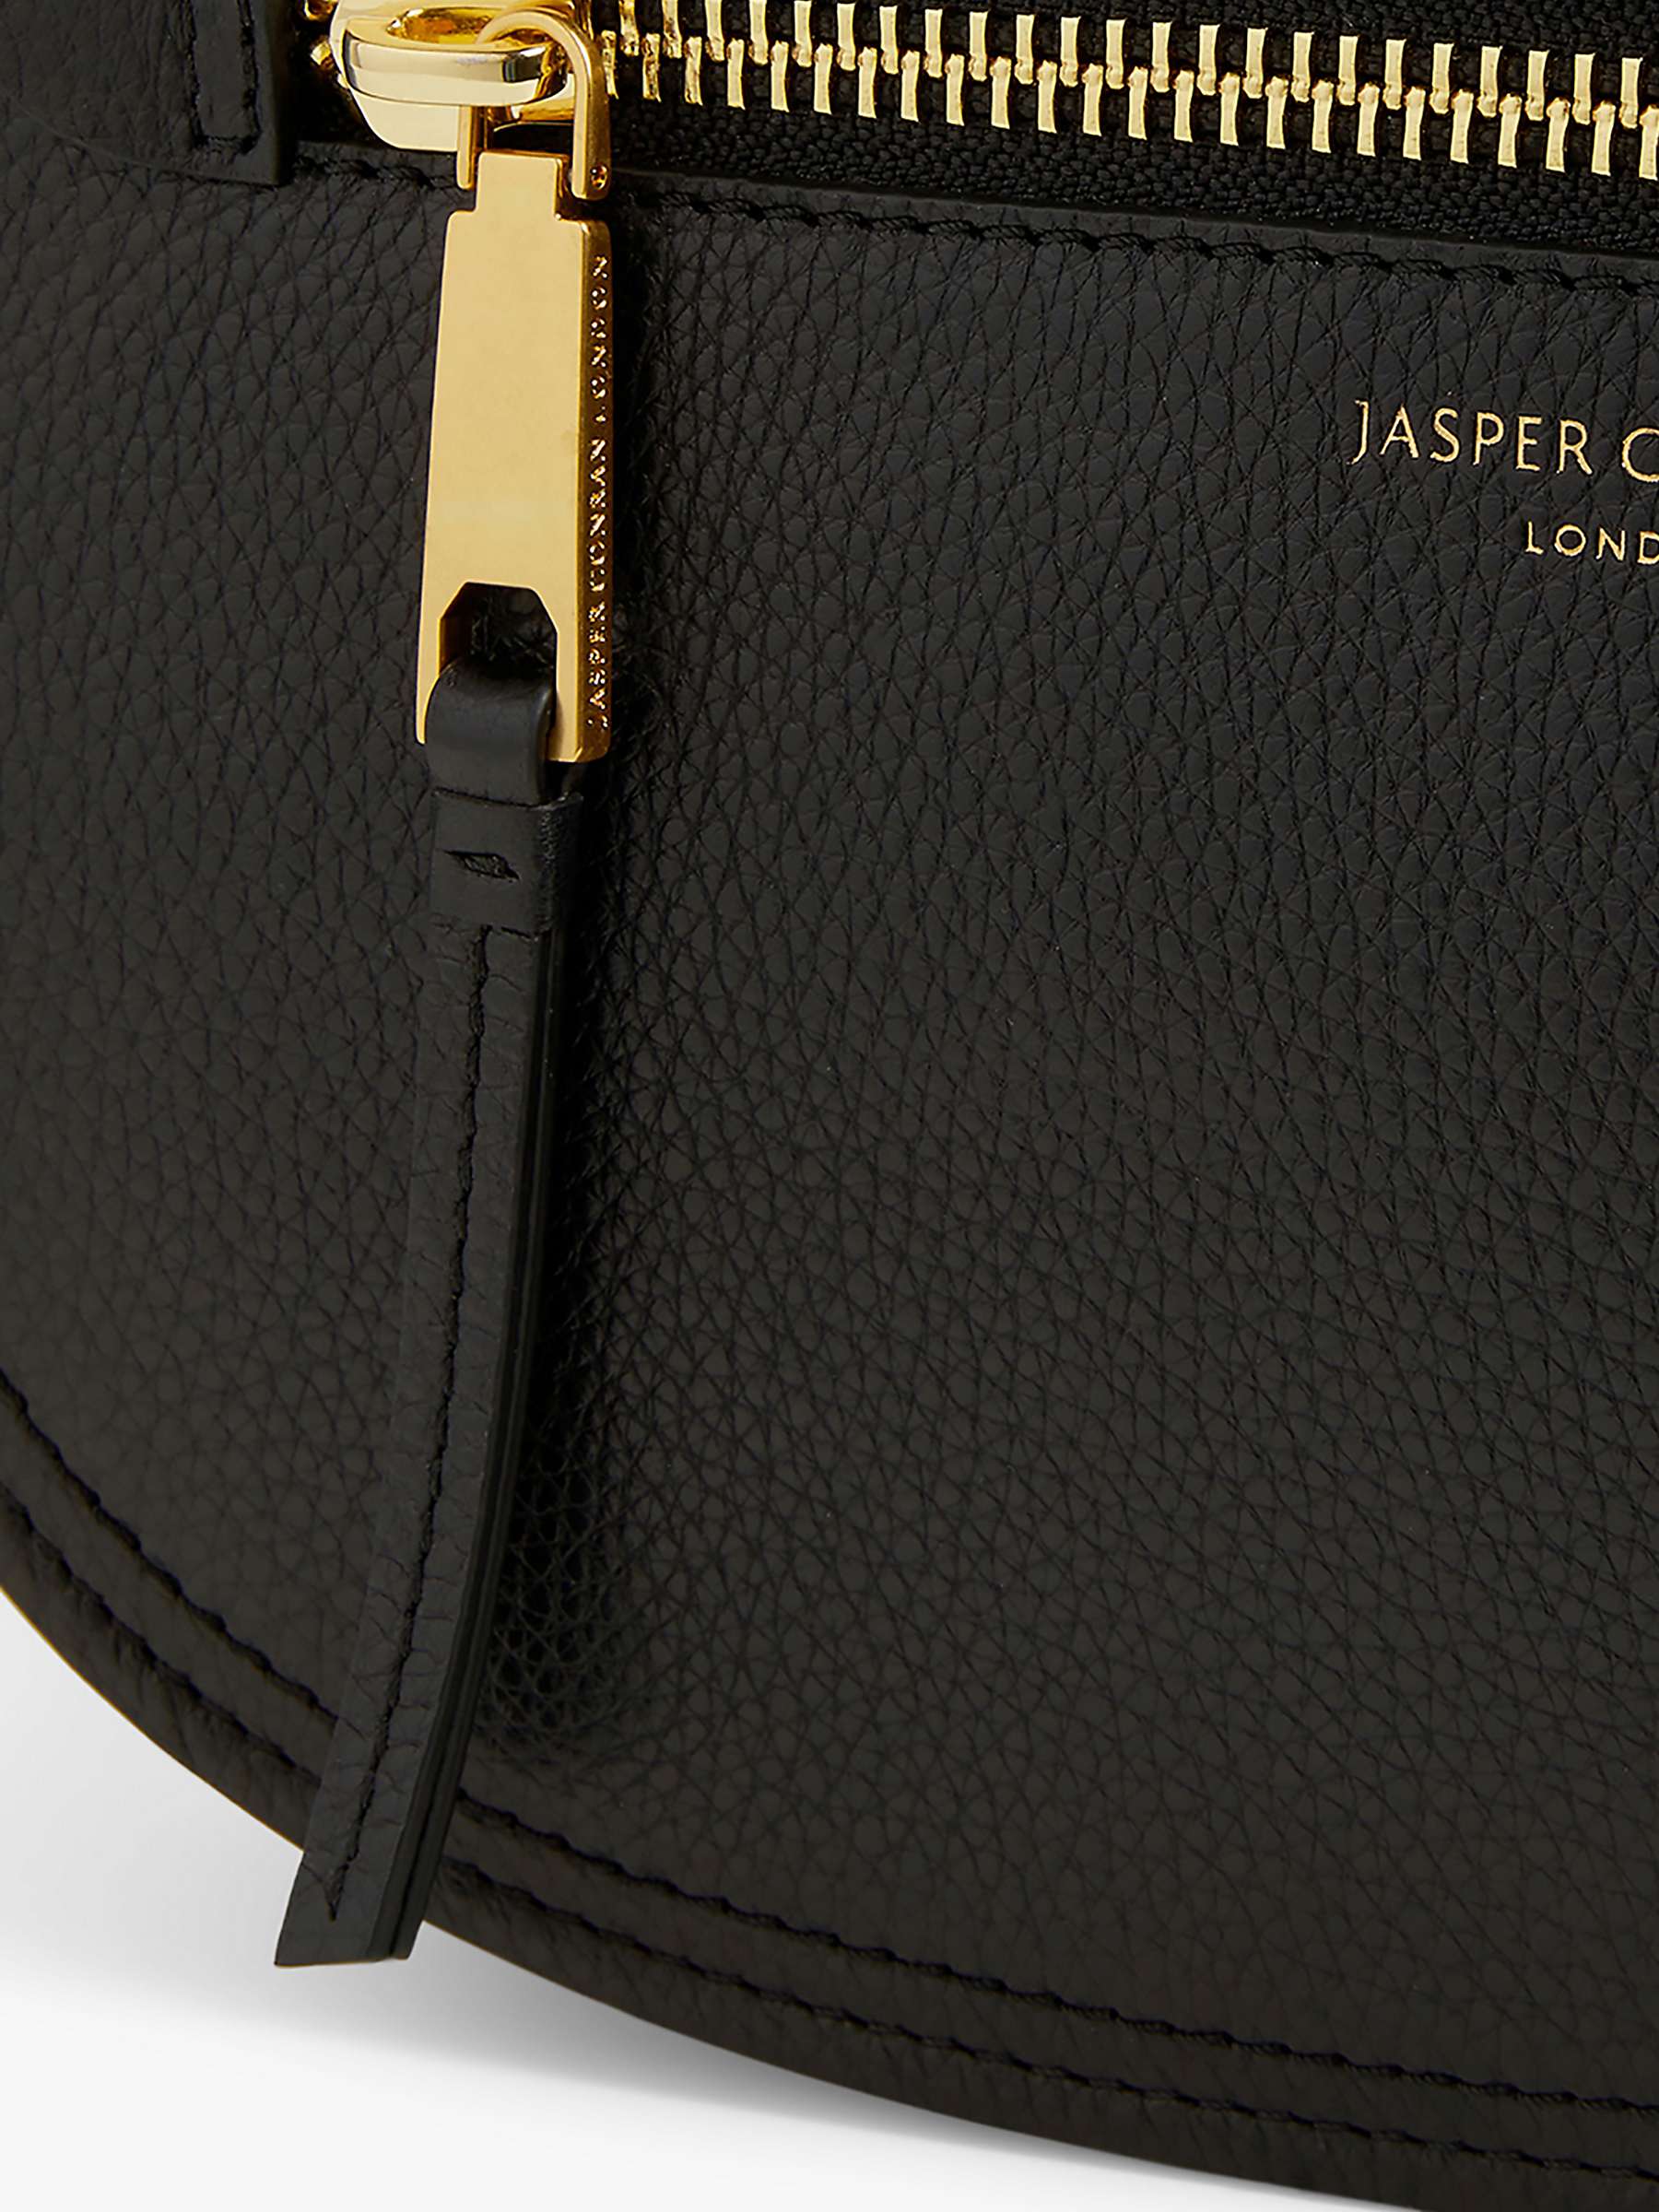 Jasper Conran London Ada Leather Saddle Bag, Black at John Lewis & Partners